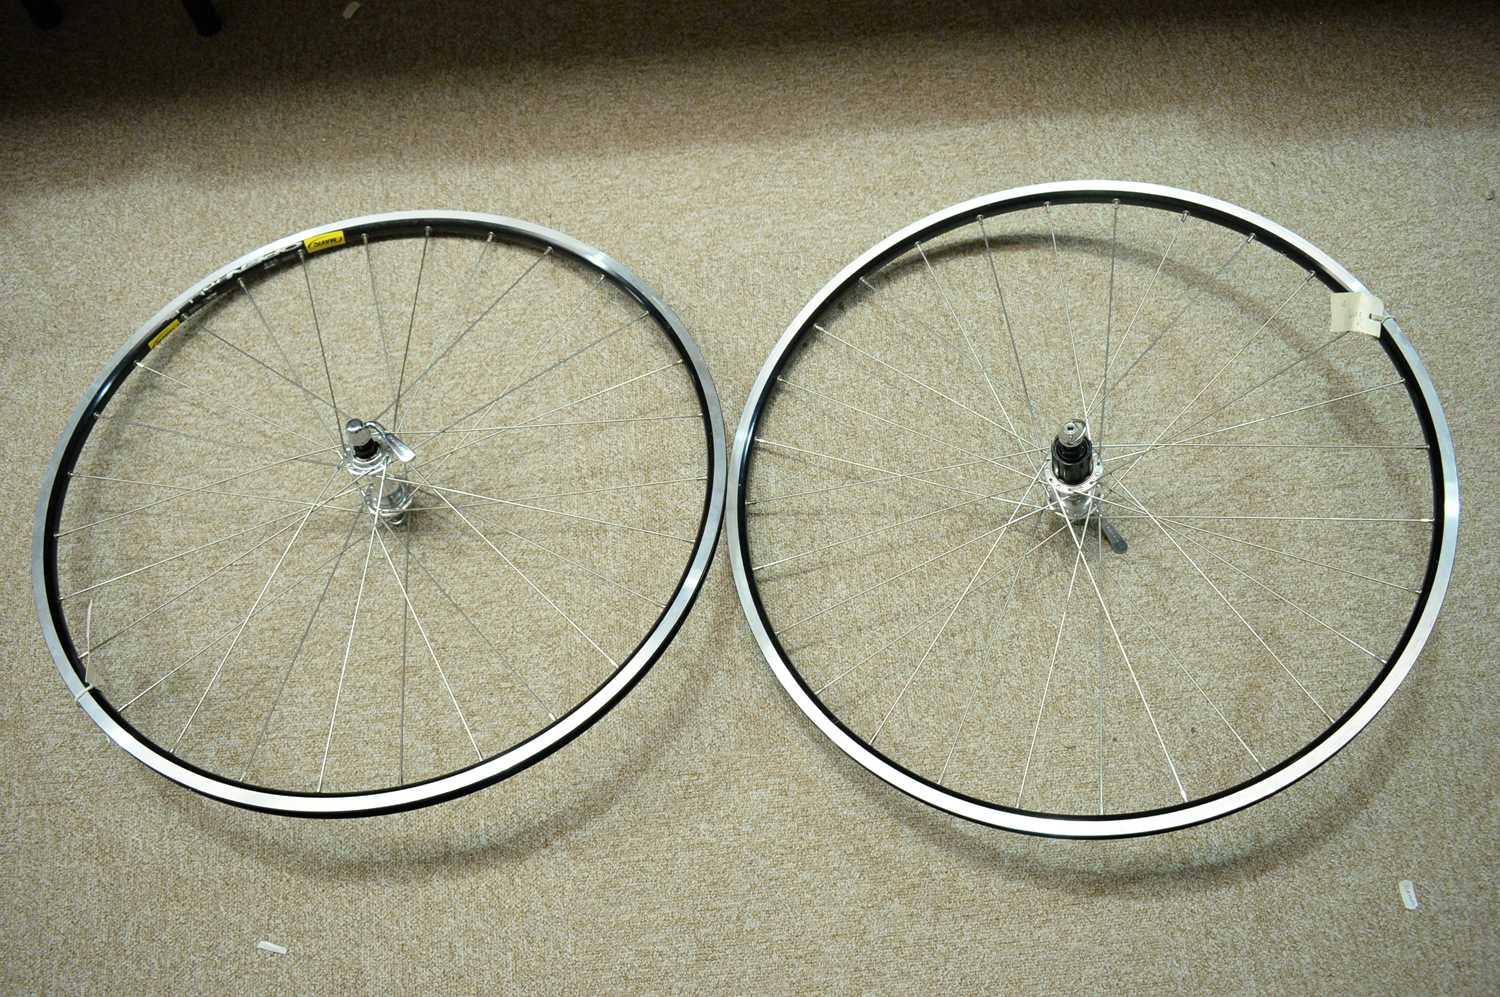 Lot 723 - A pair of road bike wheels.